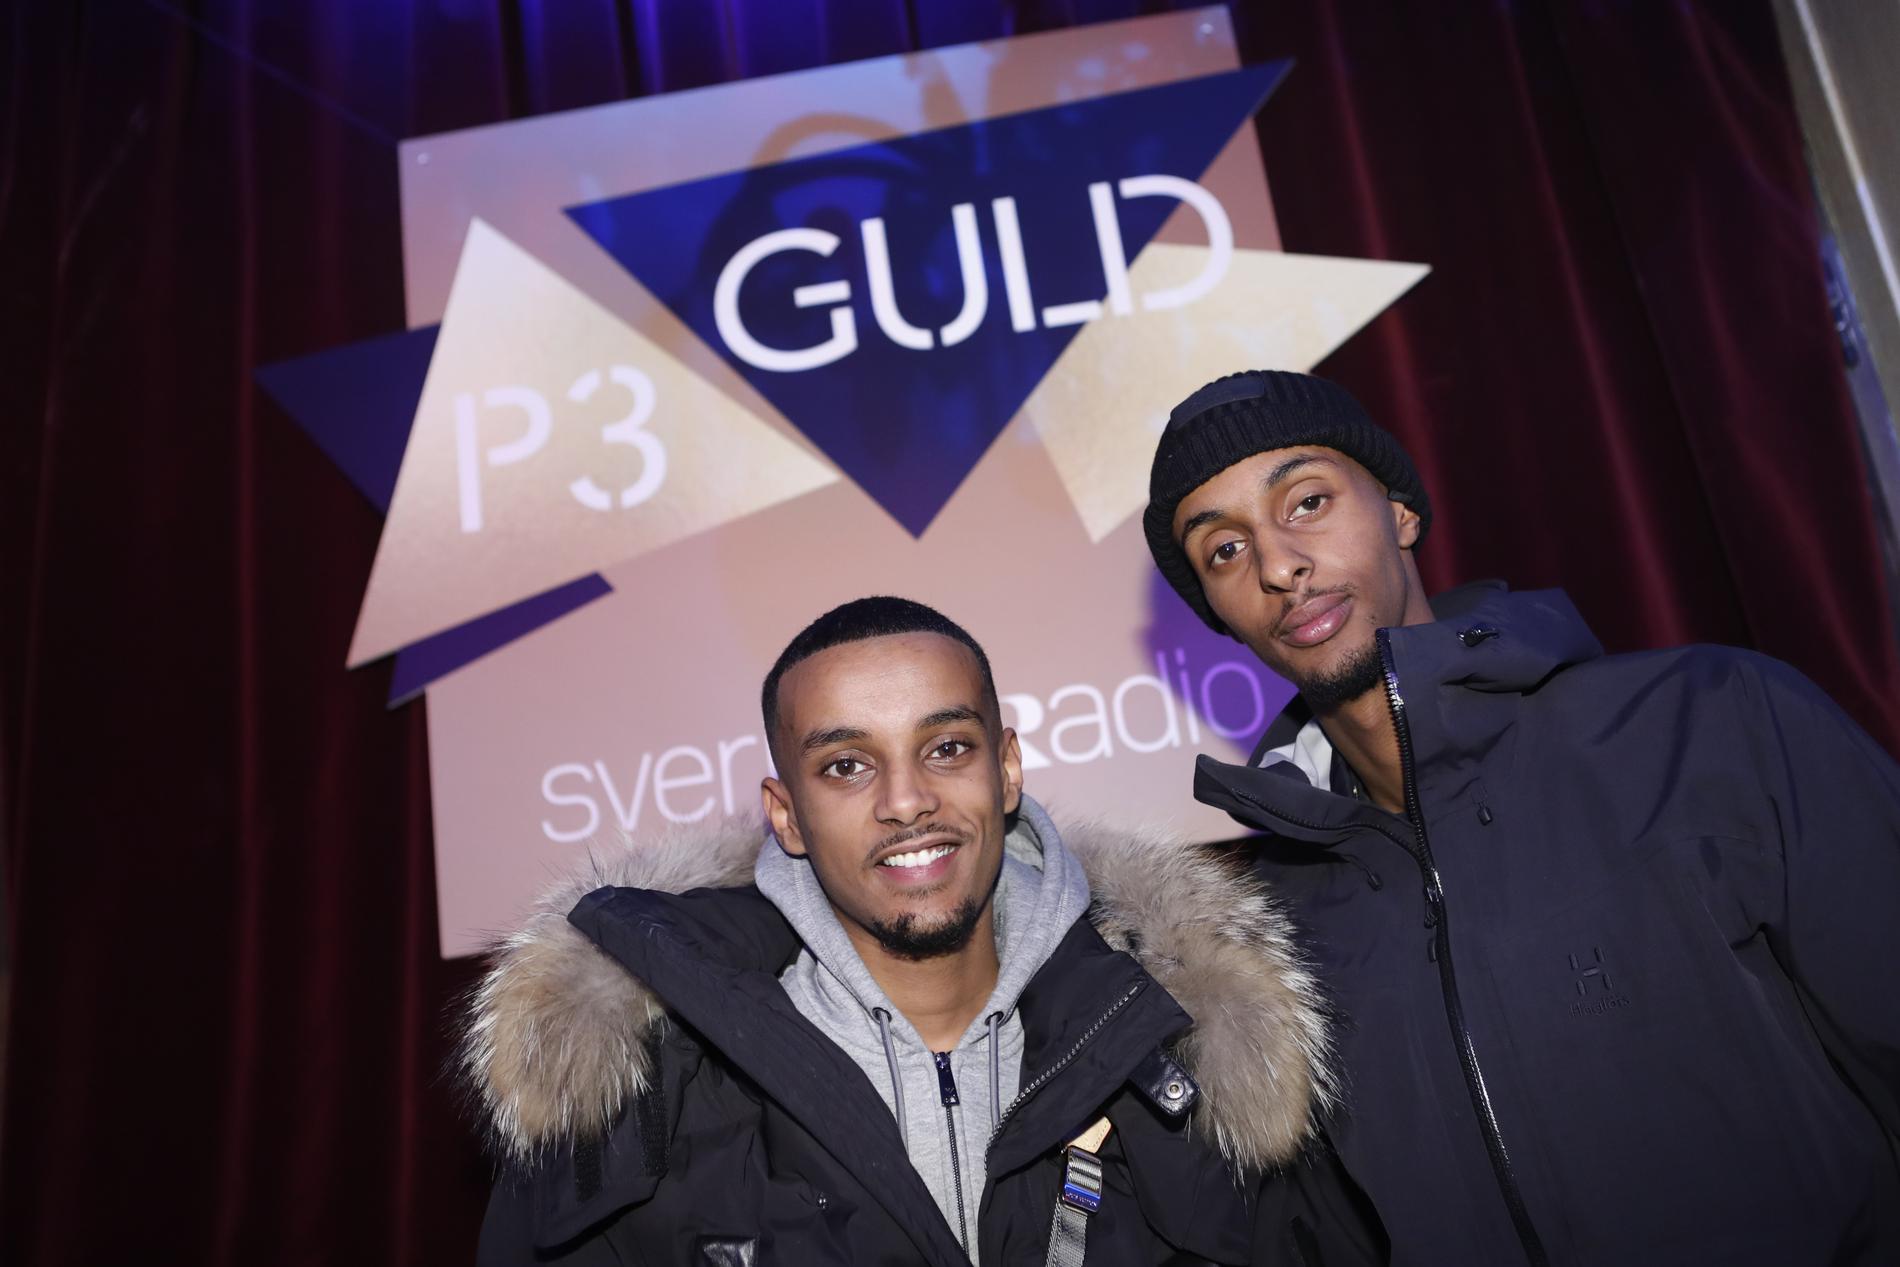 Aden x Asme vann priset ”Årets grupp”.